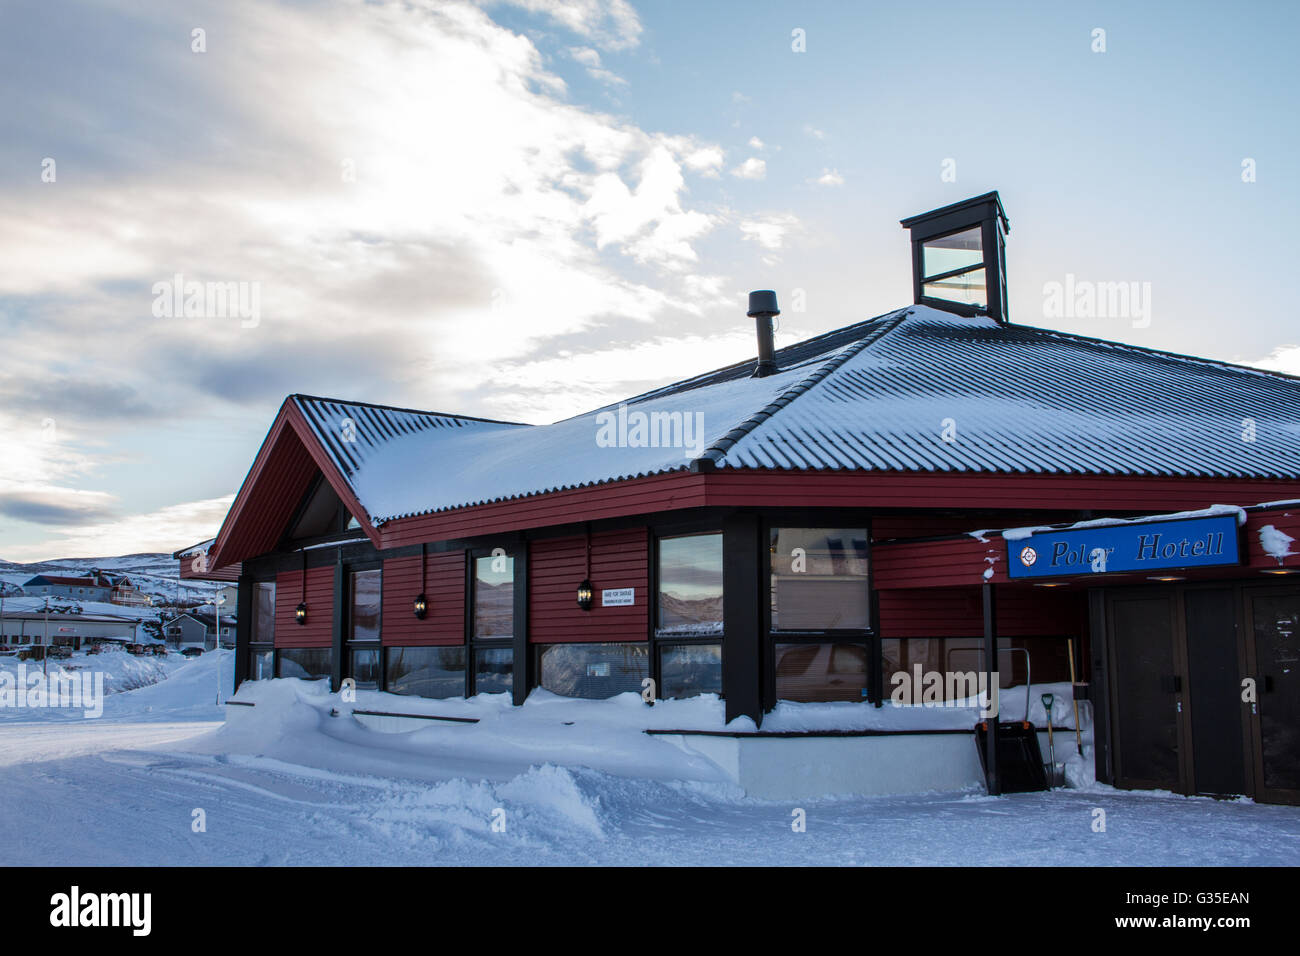 The exterior of the Polar Hotel, Batsfjord. Stock Photo